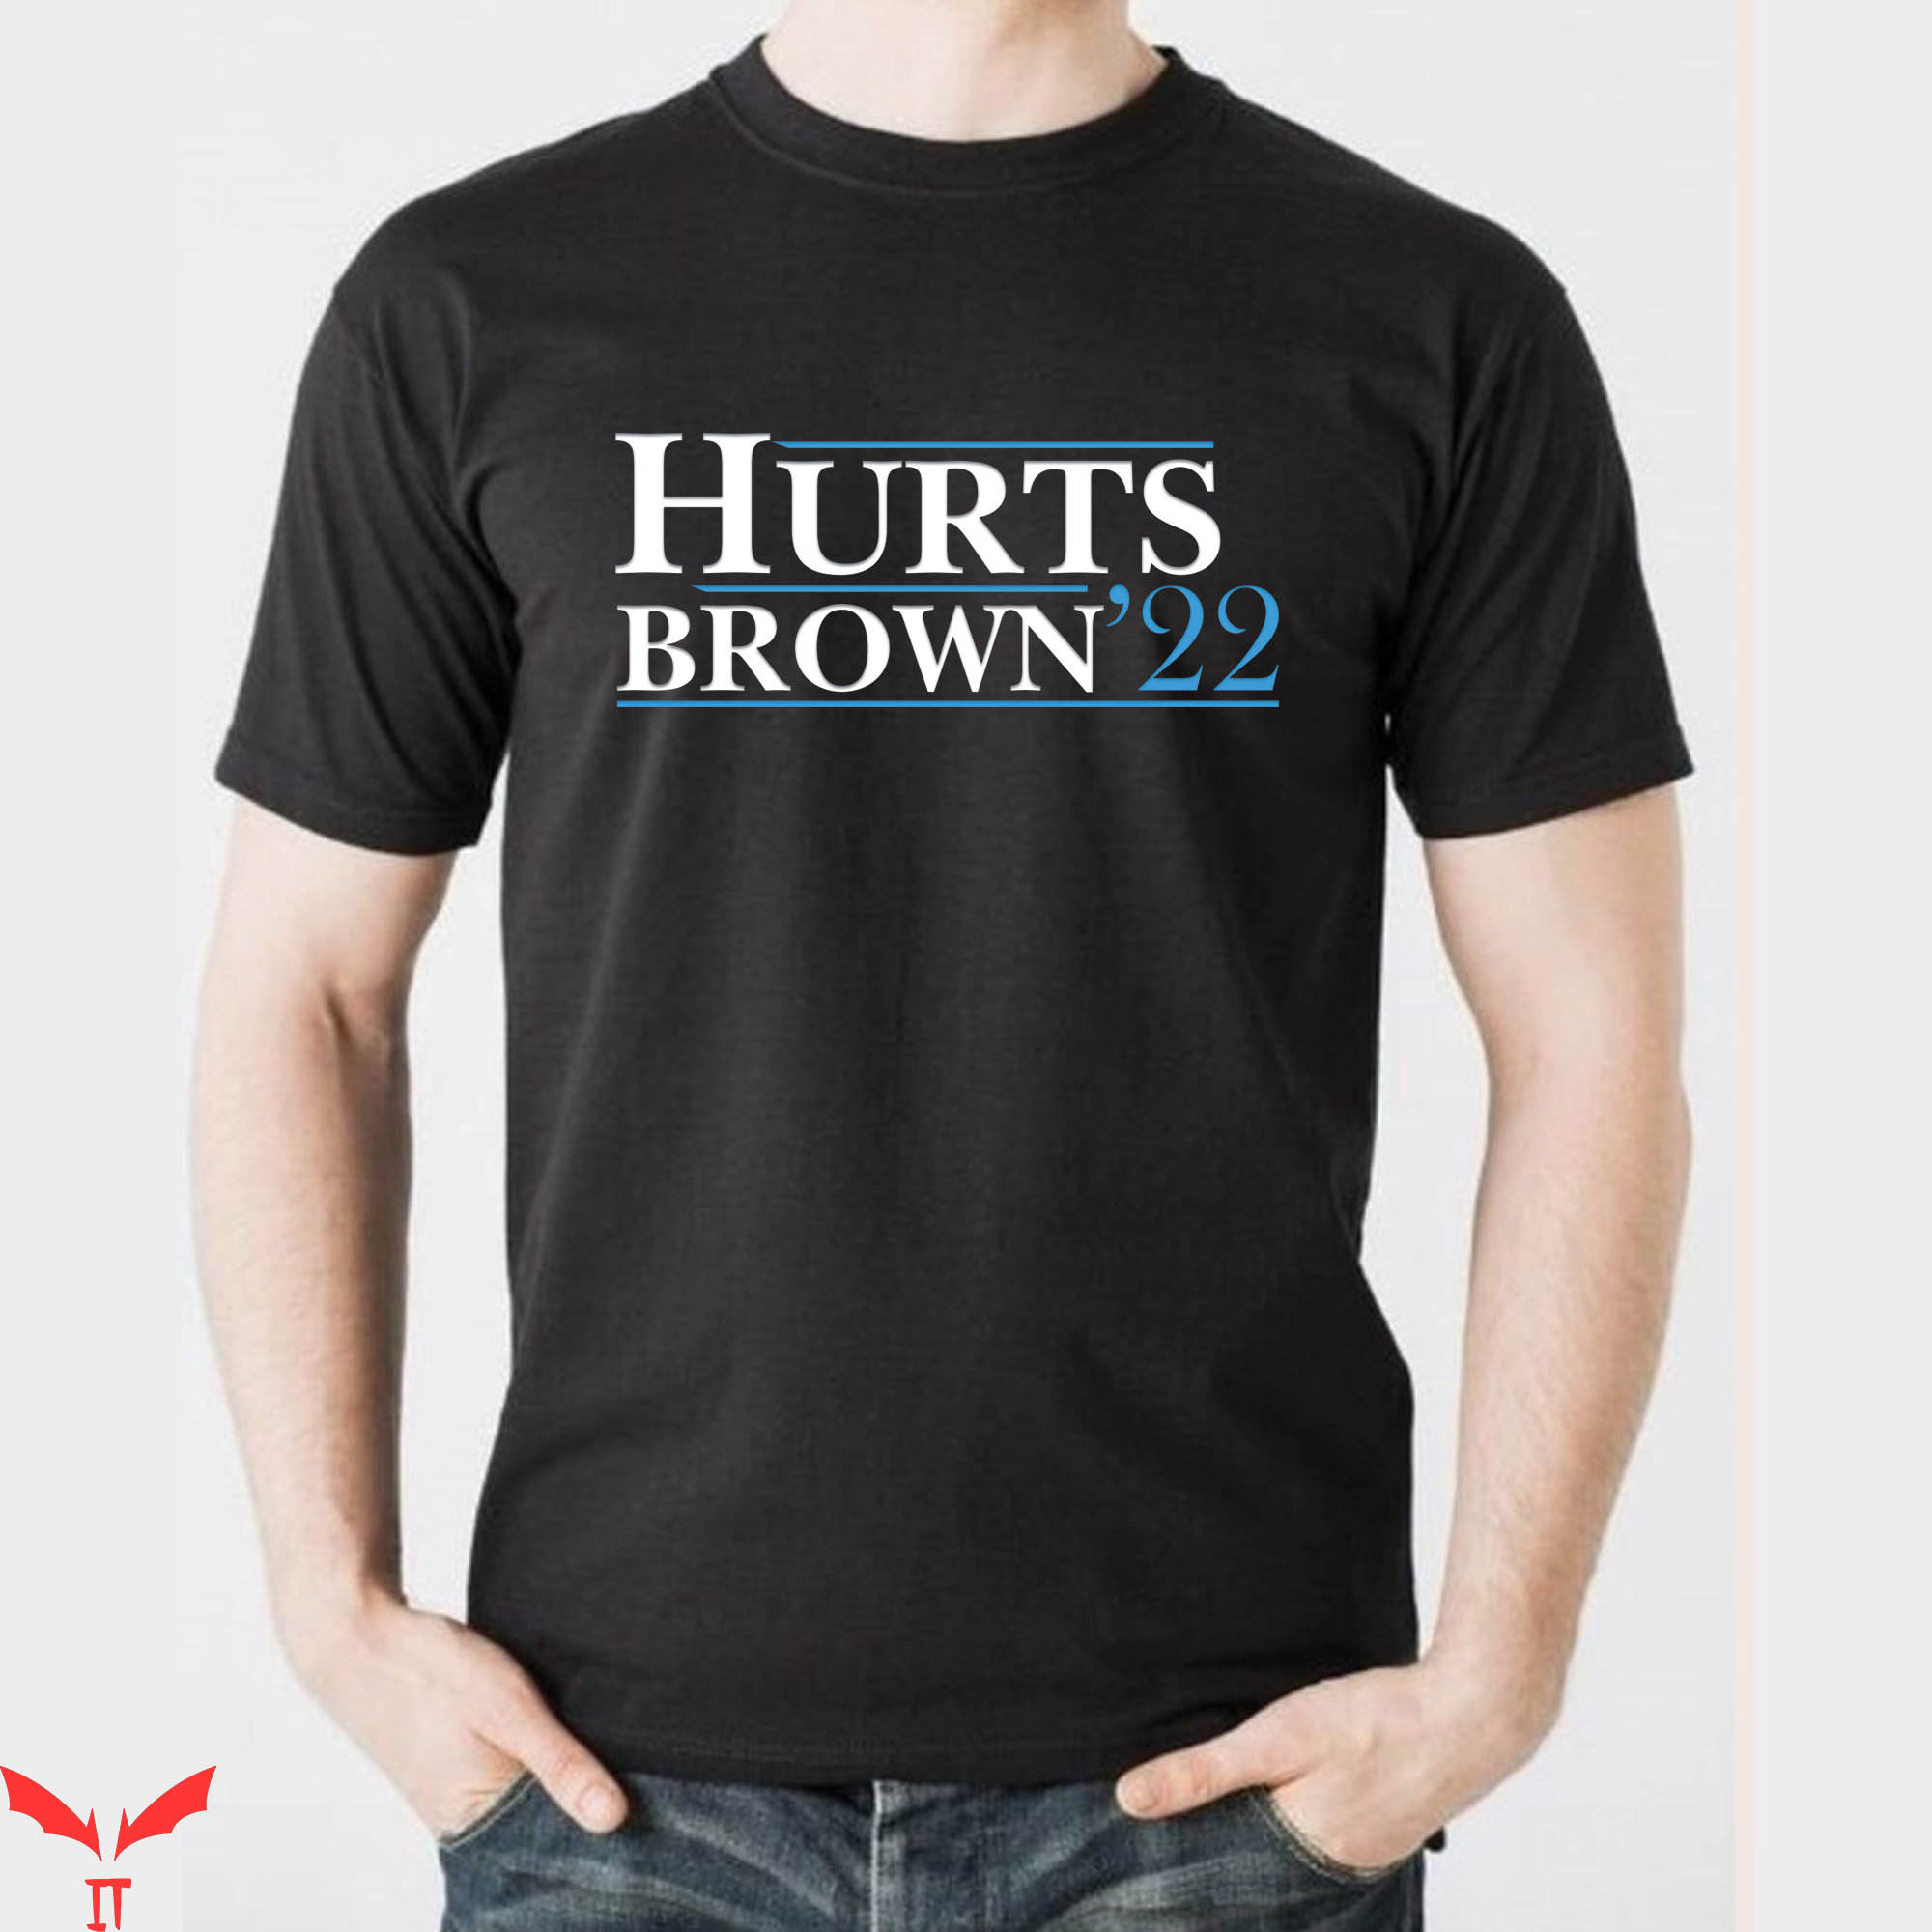 Vintage Brown T-Shirt Hurts Brown 22 Trendy Style Tee Shirt